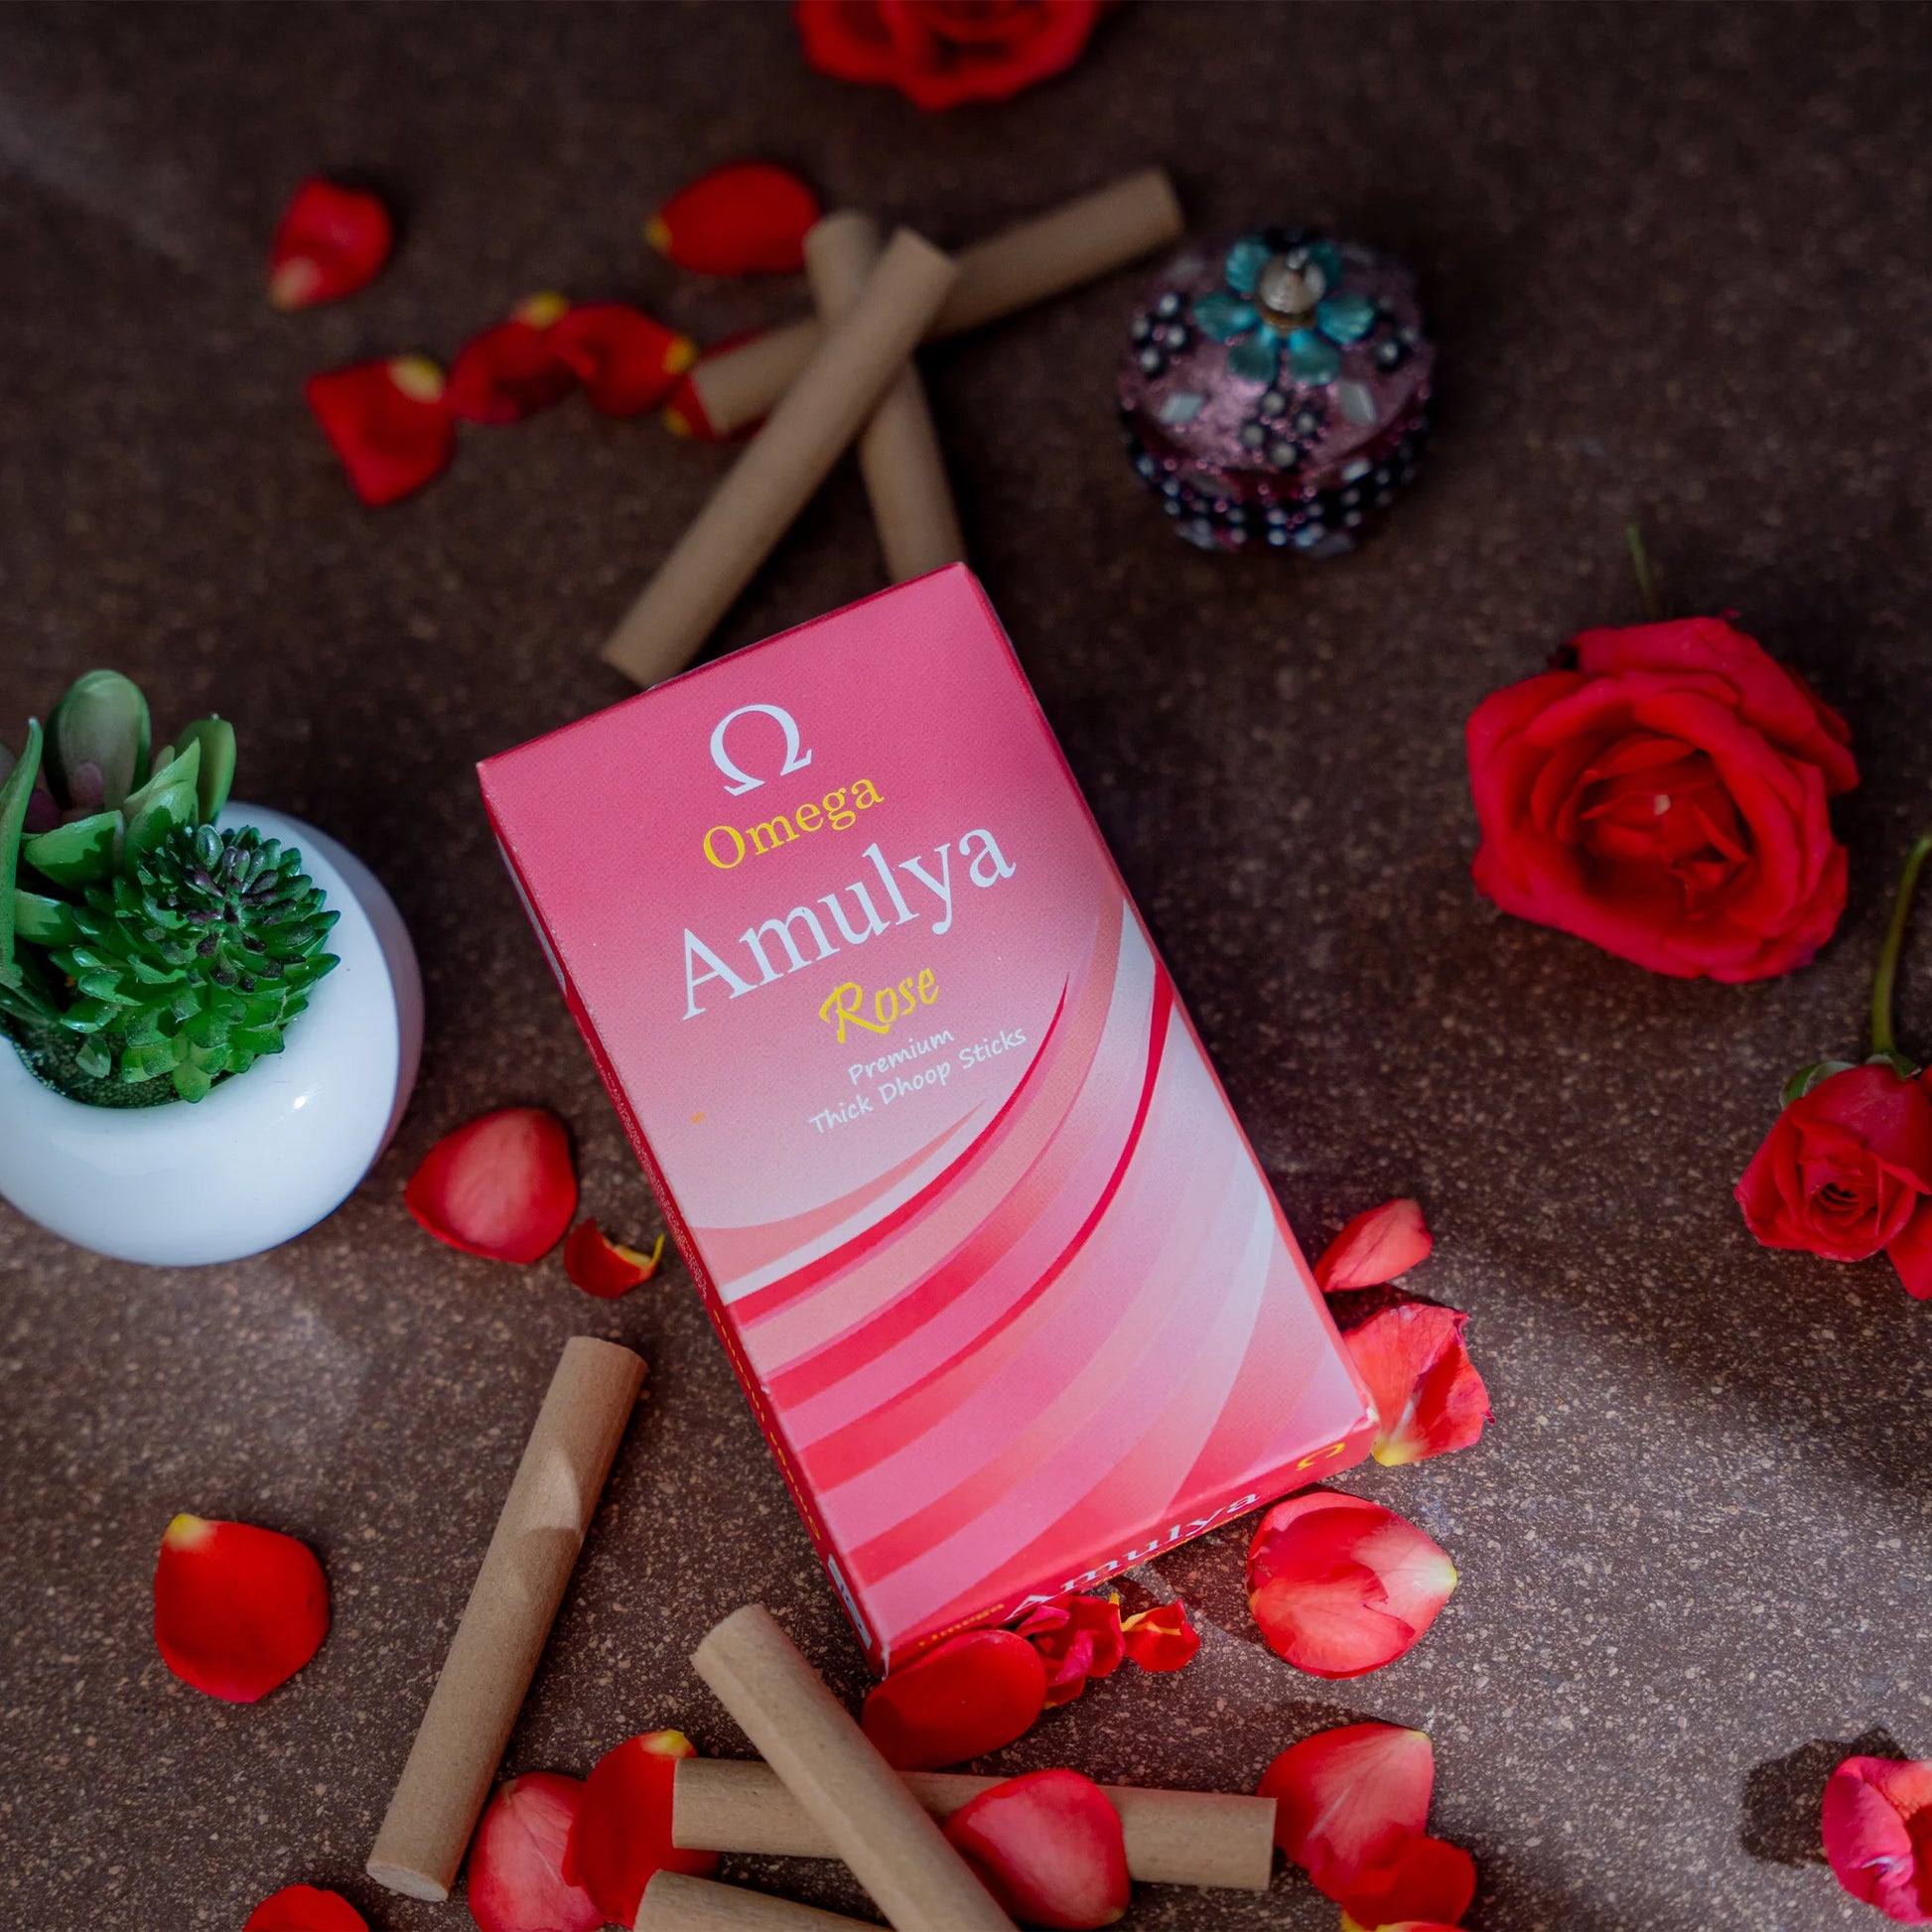 amulya-rose-premium-thick-dhoop-sticks